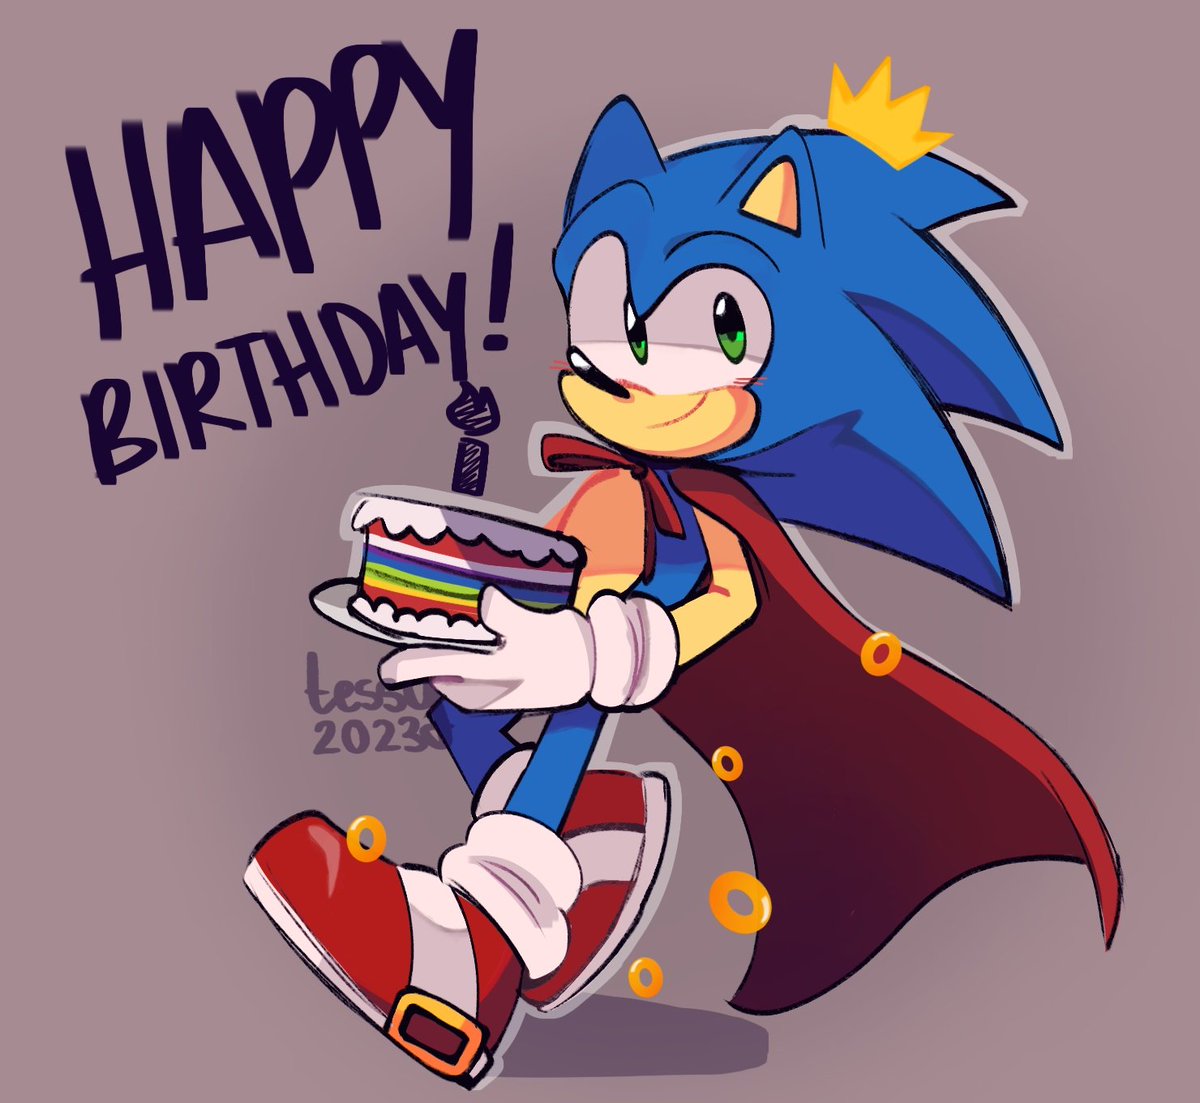 HAPPY BIRTHDAY SONIC 💙✨
#SonicTheHedgehog #Sonic32nd